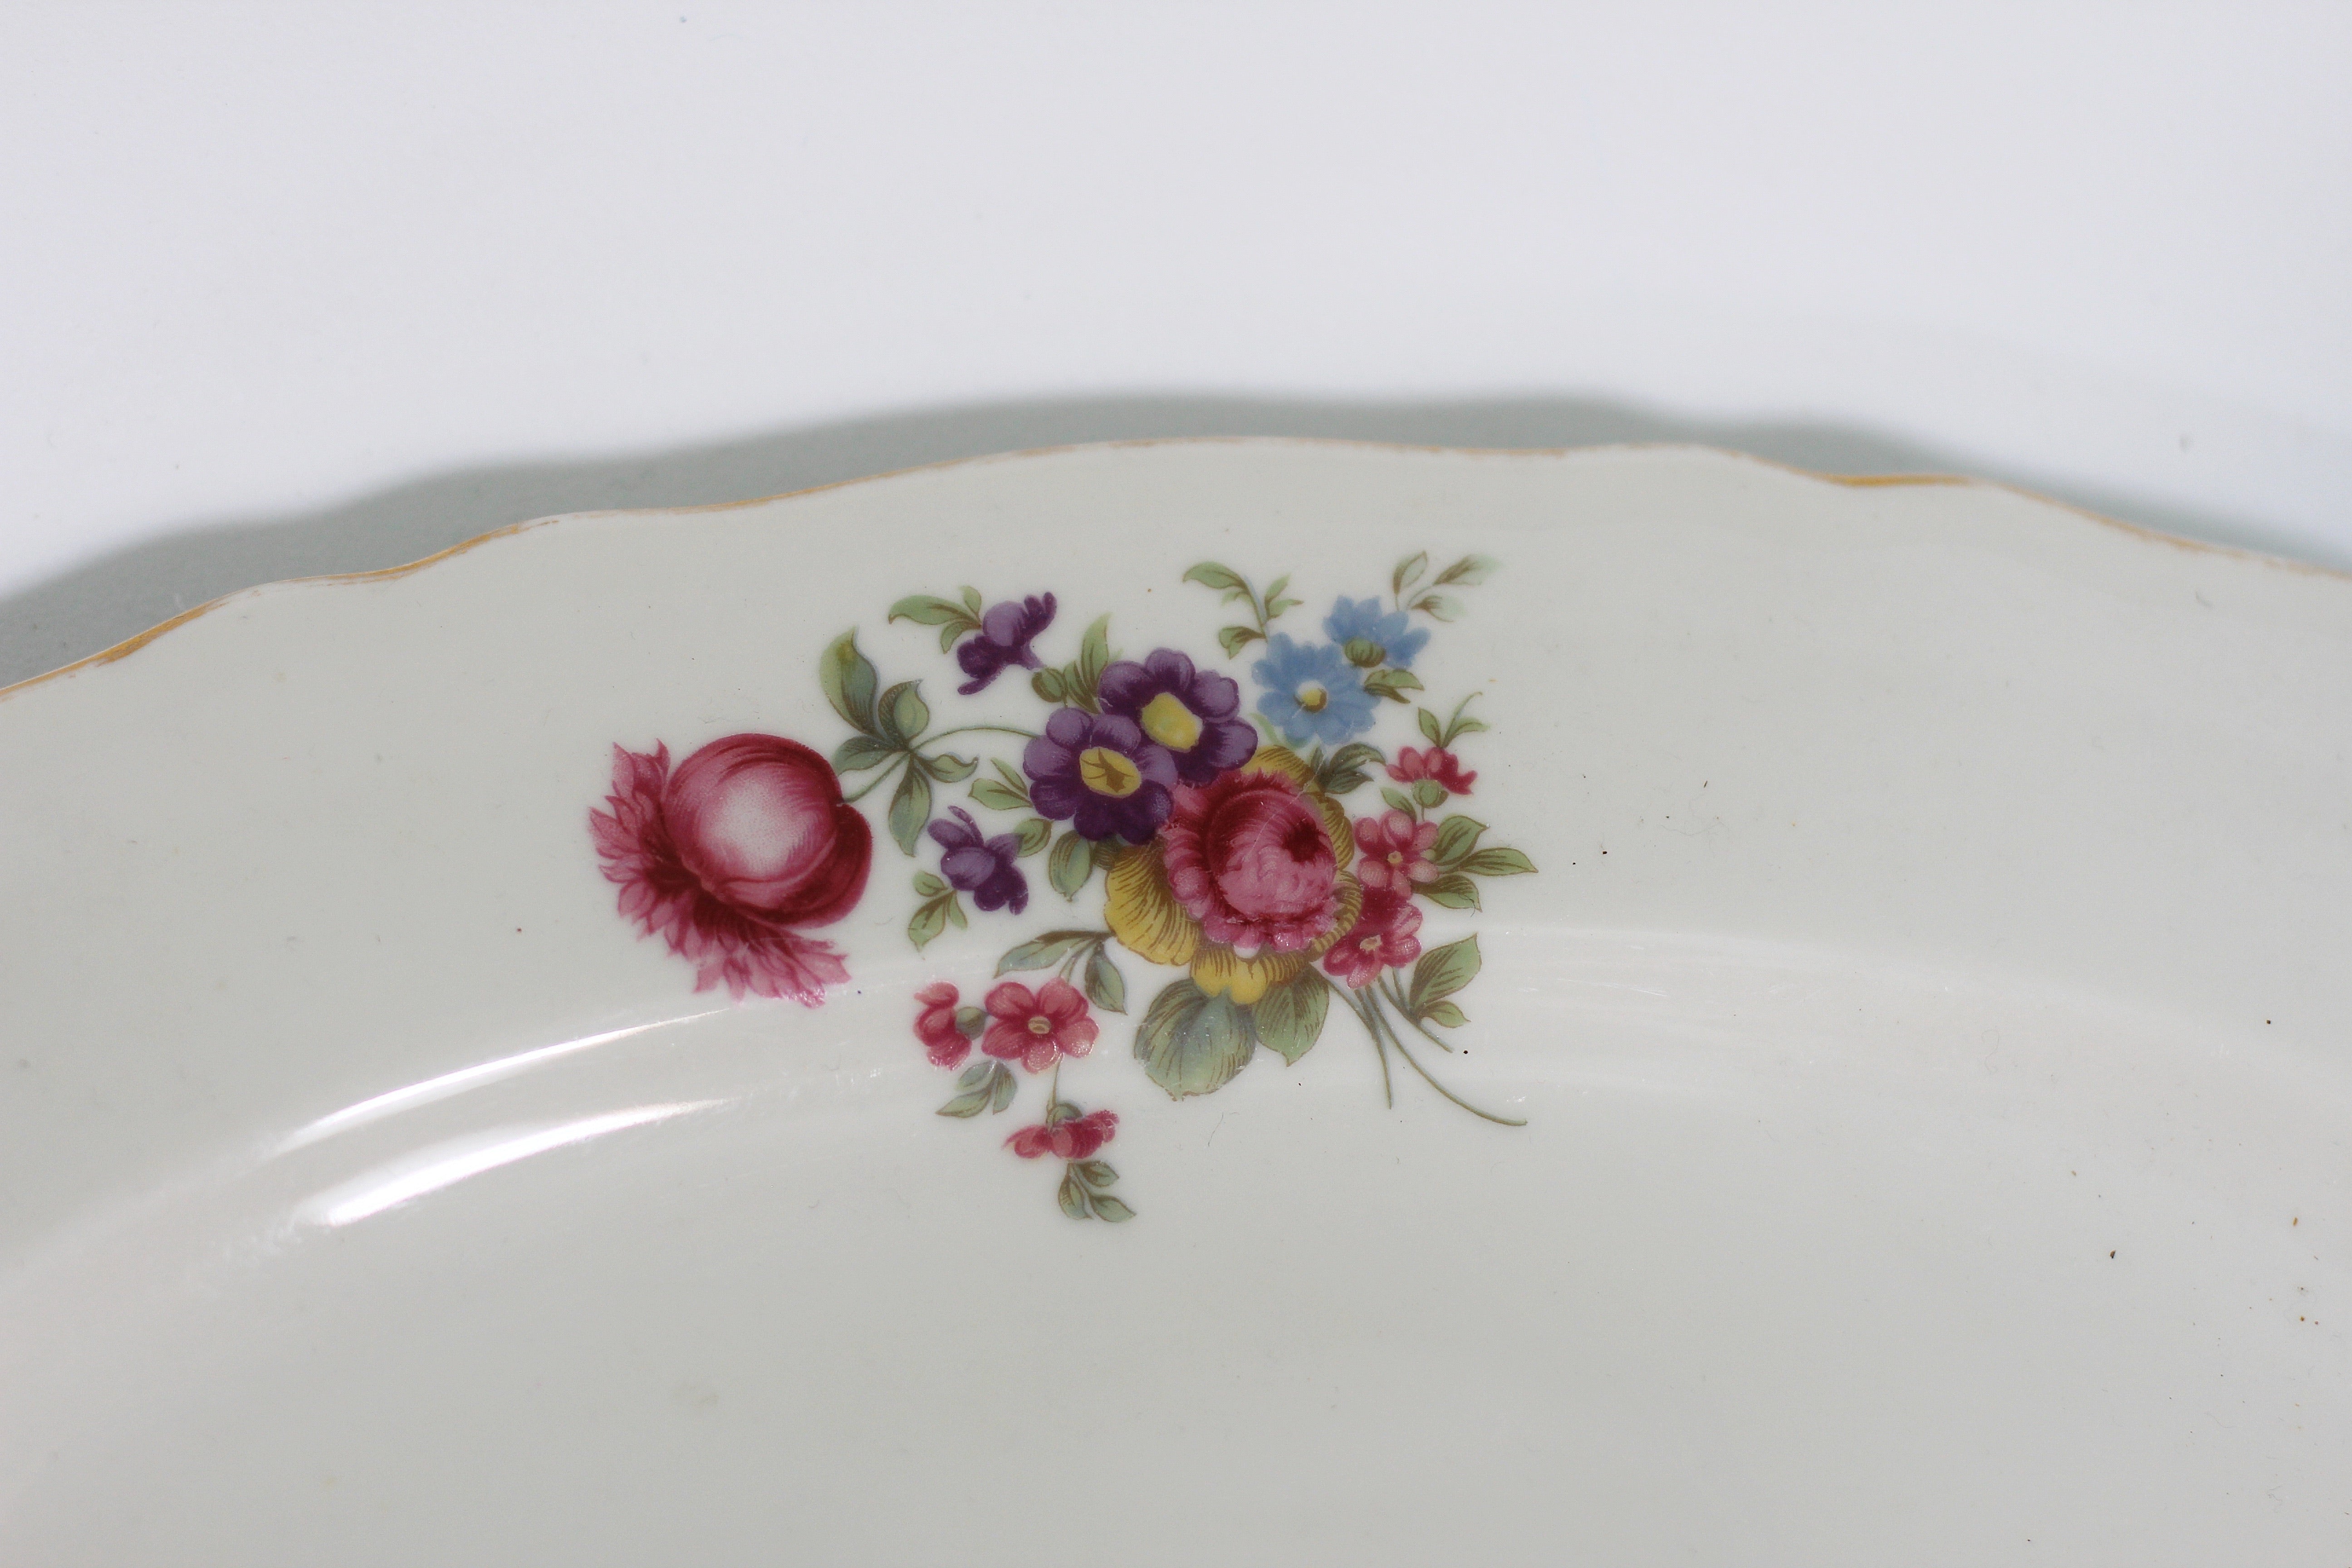 Vintage Franconia Selb Bavaria Porcelain Tray